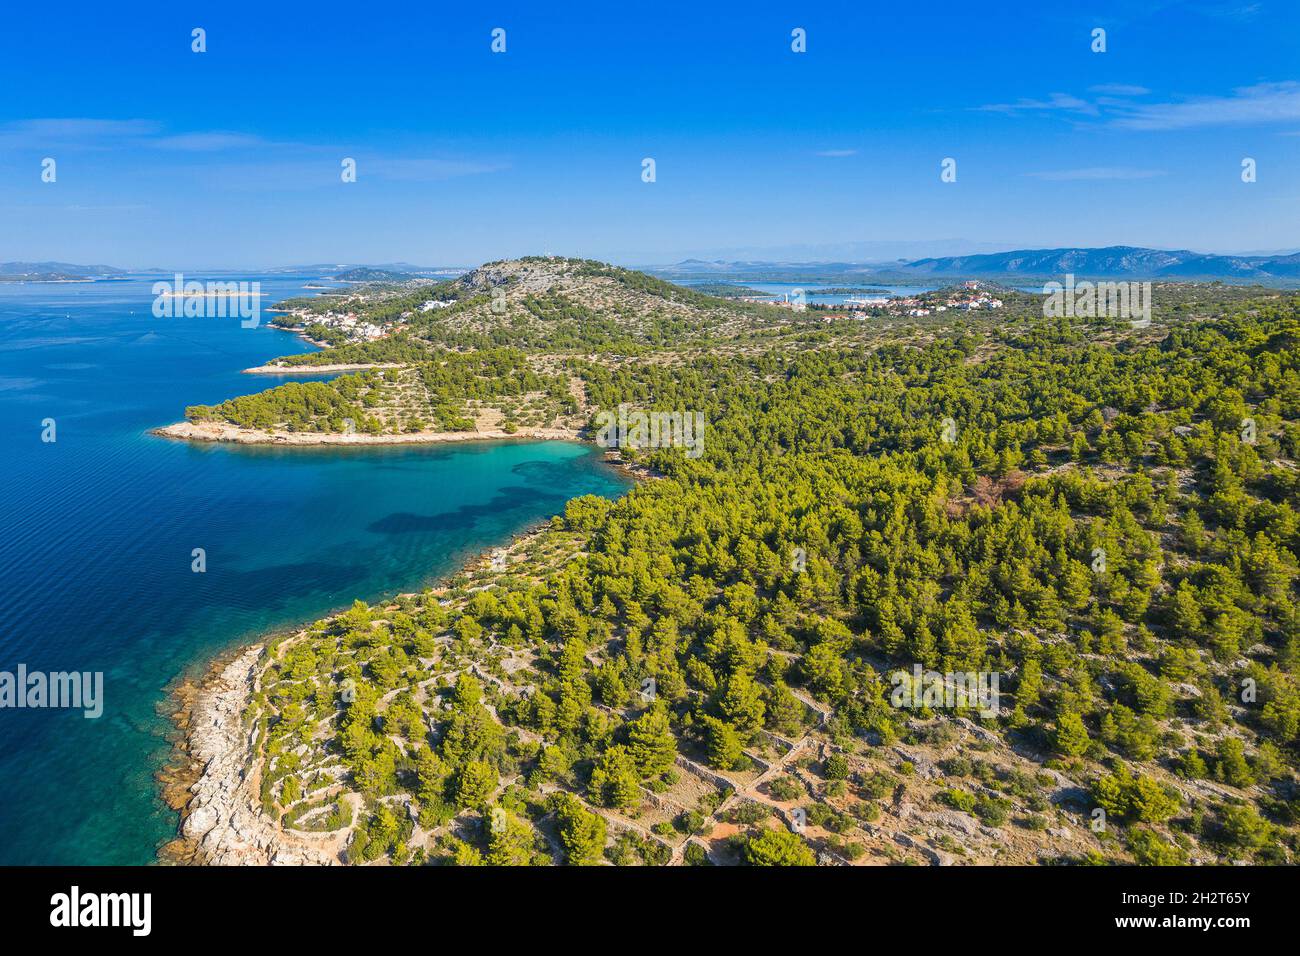 Shore of Murter island in Dalmatia, Croatia, aerial view Stock Photo